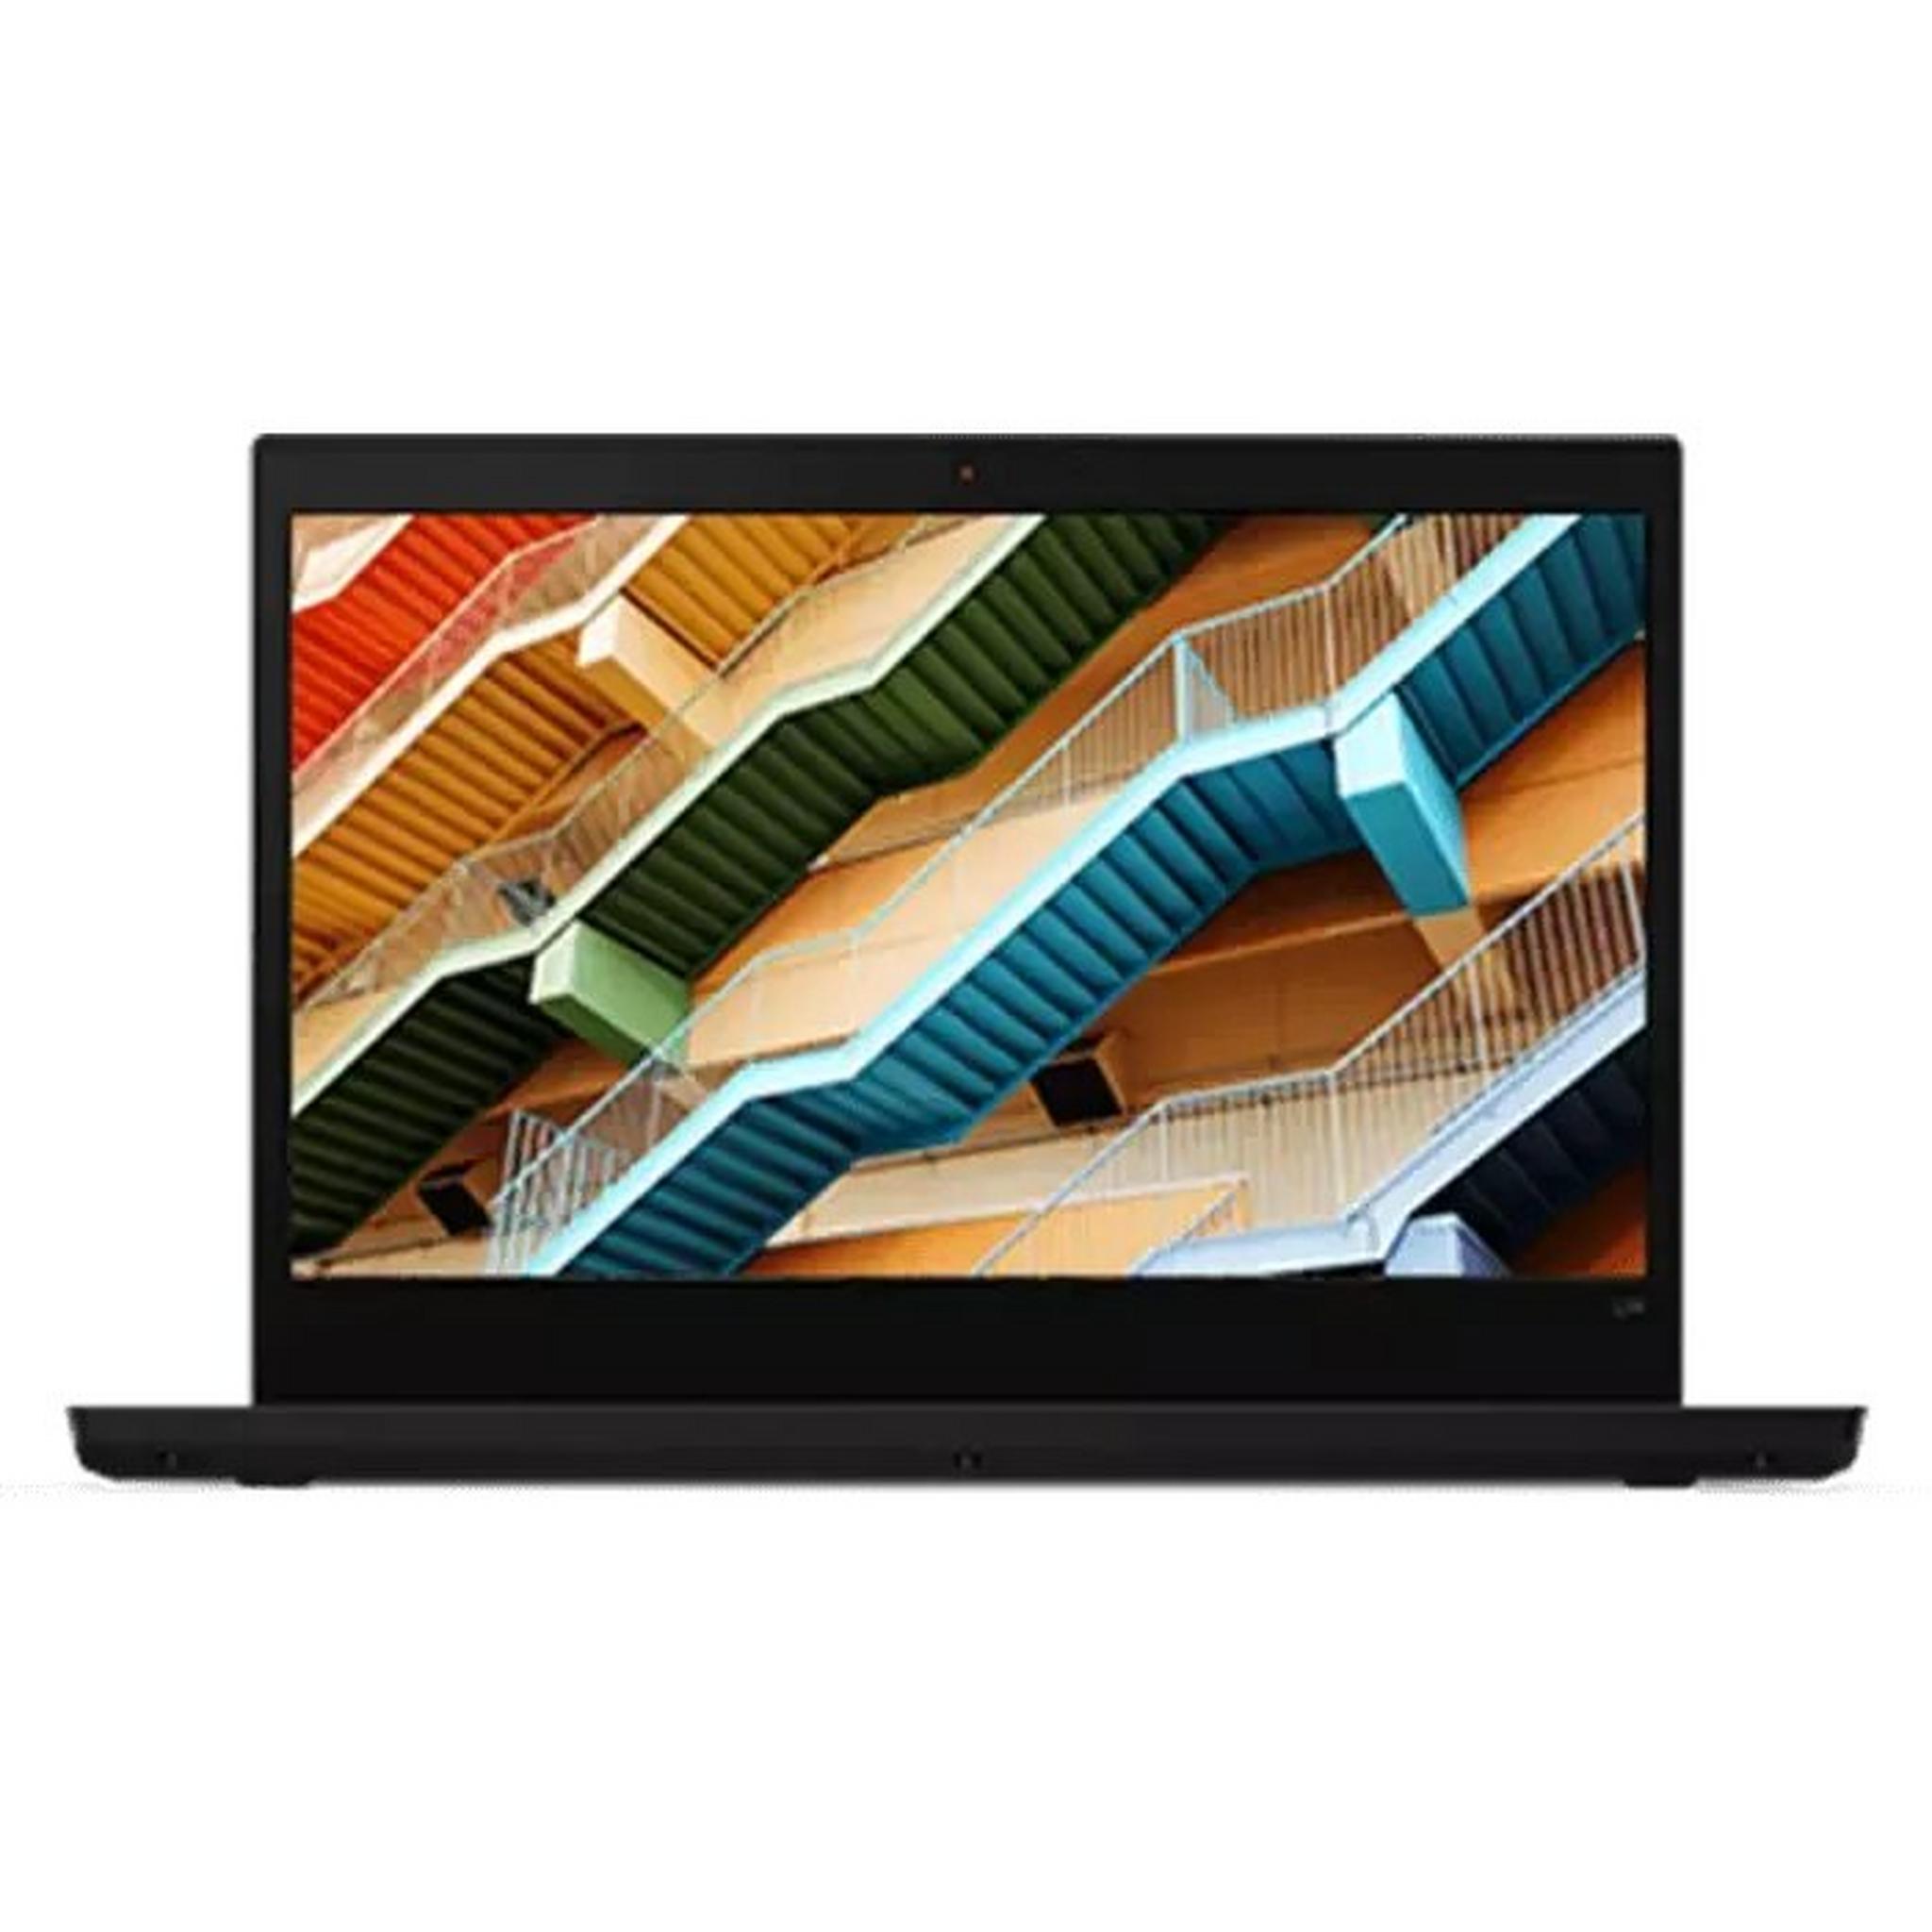 Lenovo ThinkPad L14 Intel Core i7 11th Gen, 8GB RAM, 512GB SSD, 14-inch FHD Laptop - Black